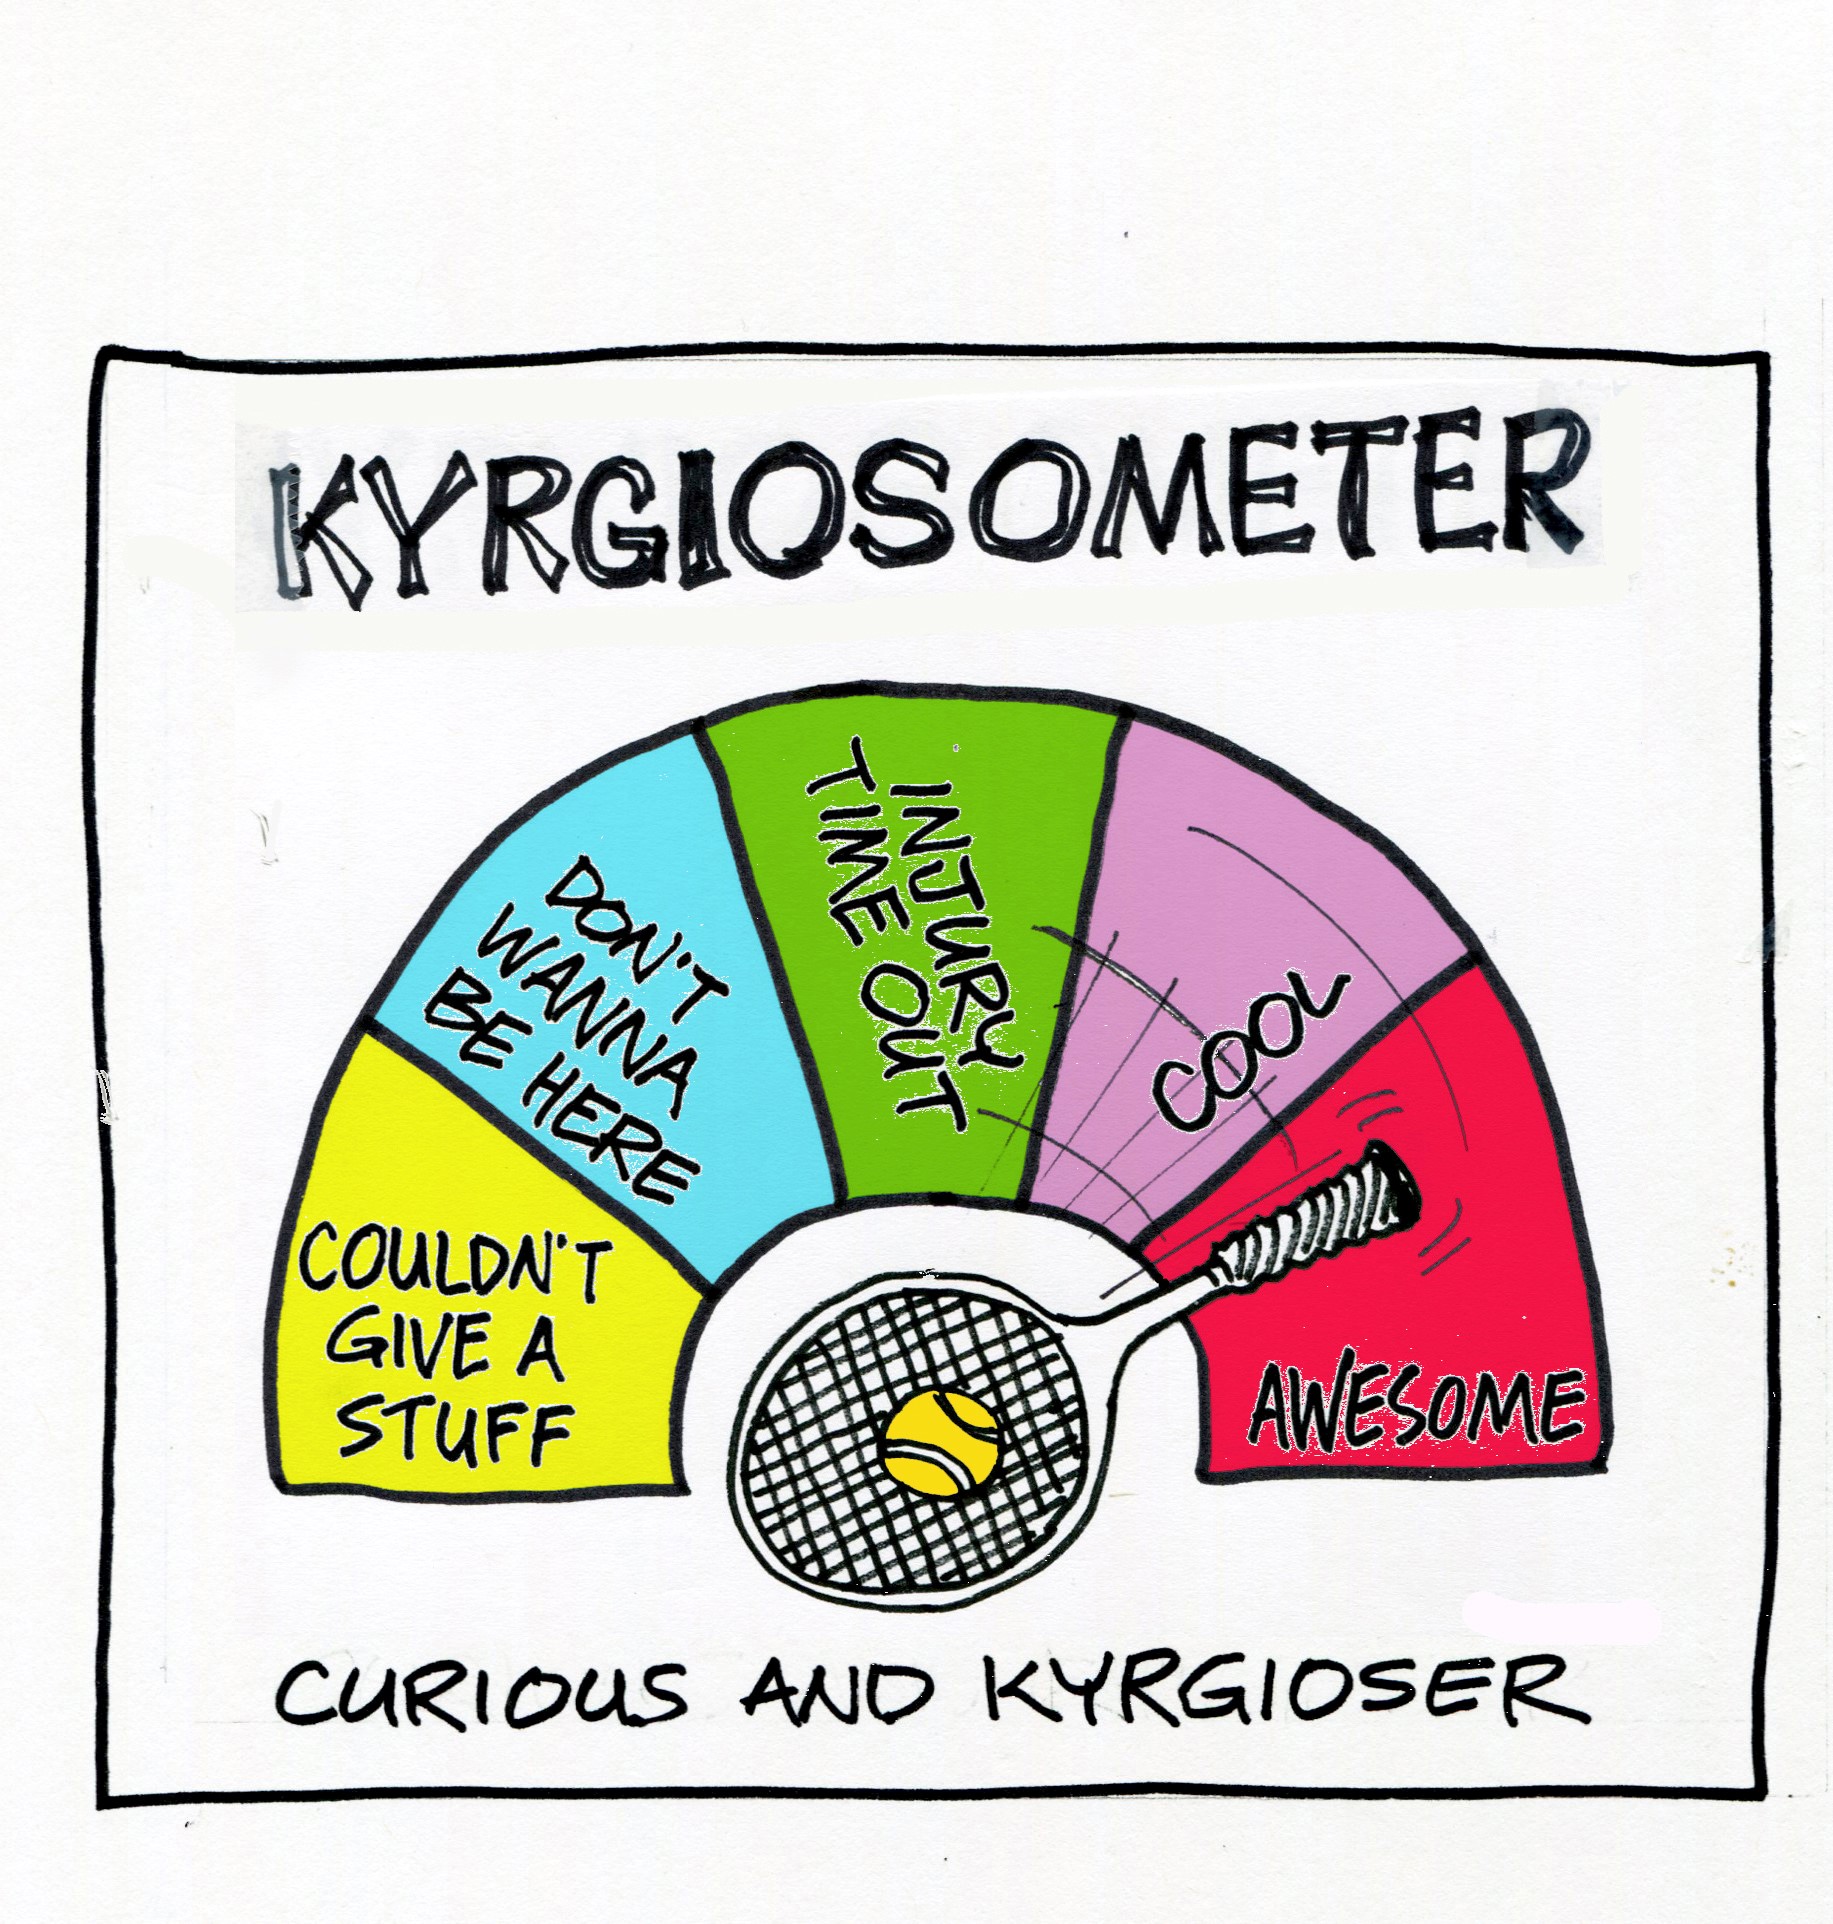 George Haddon explores the Kyrgiosometer